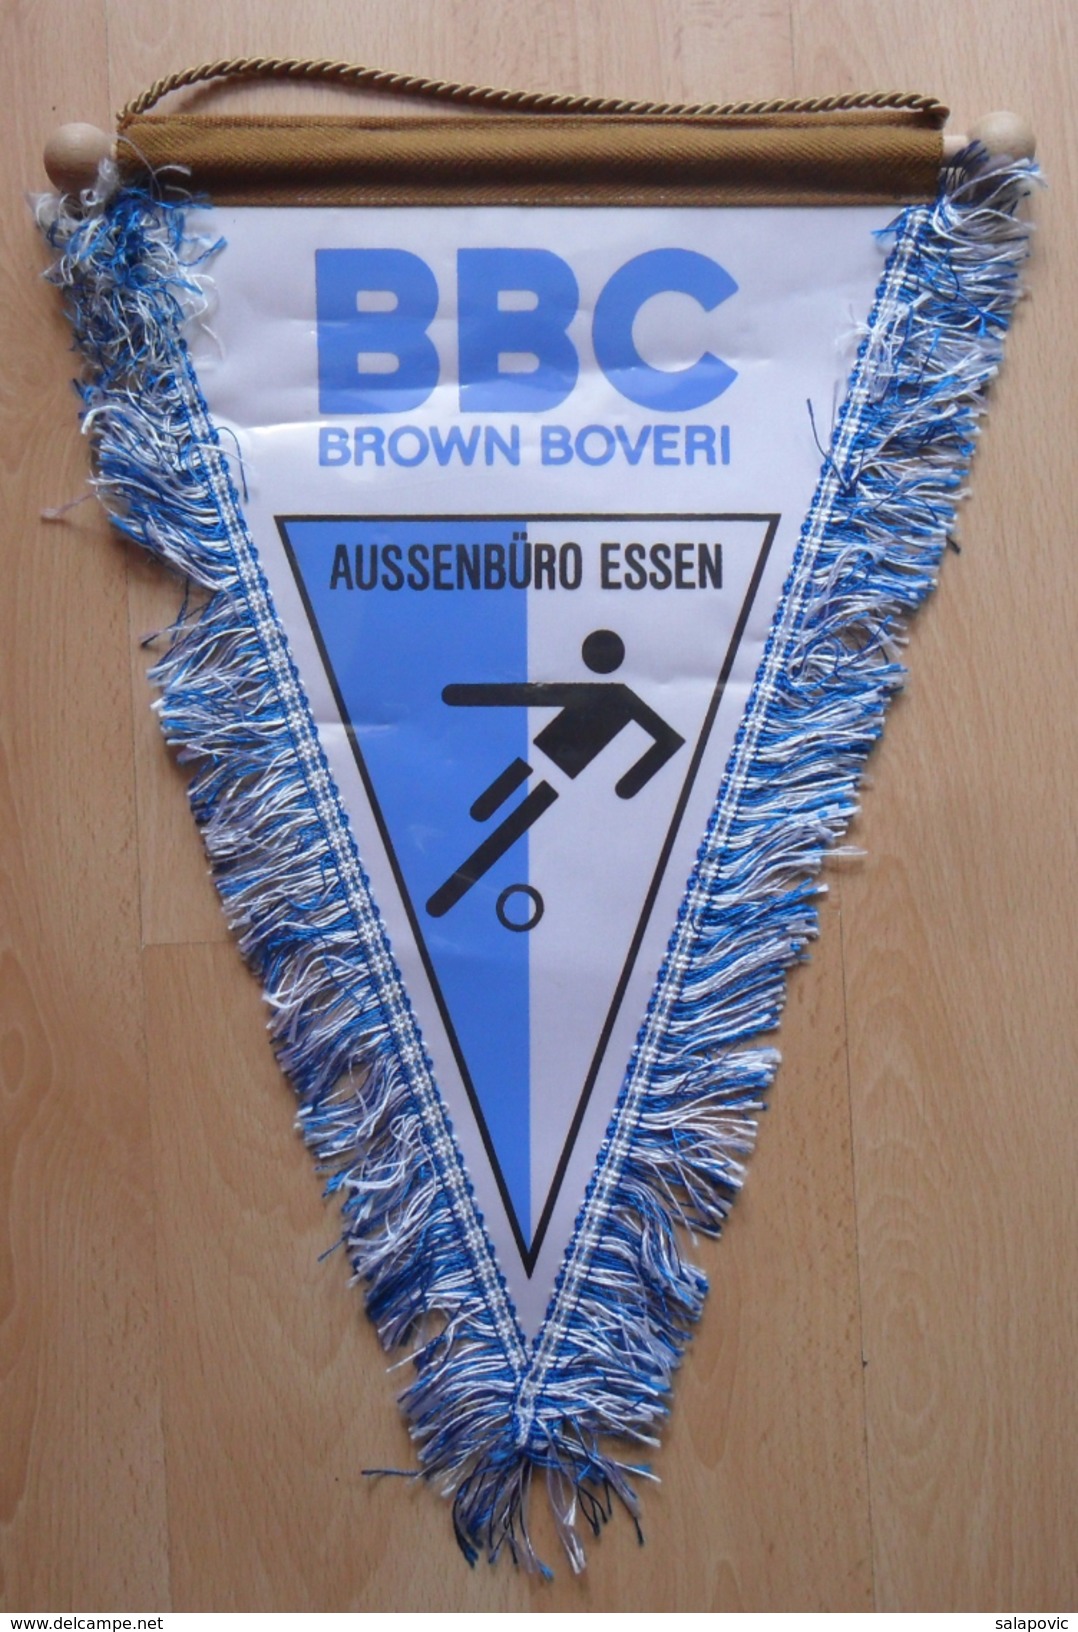 BBC BROWN BOVERI AUSSENBURO ESSEN  GERMANY  FOOTBALL CLUB, SOCCER / FUTBOL / CALCIO, OLD PENNANT, SPORTS FLAG - Uniformes Recordatorios & Misc